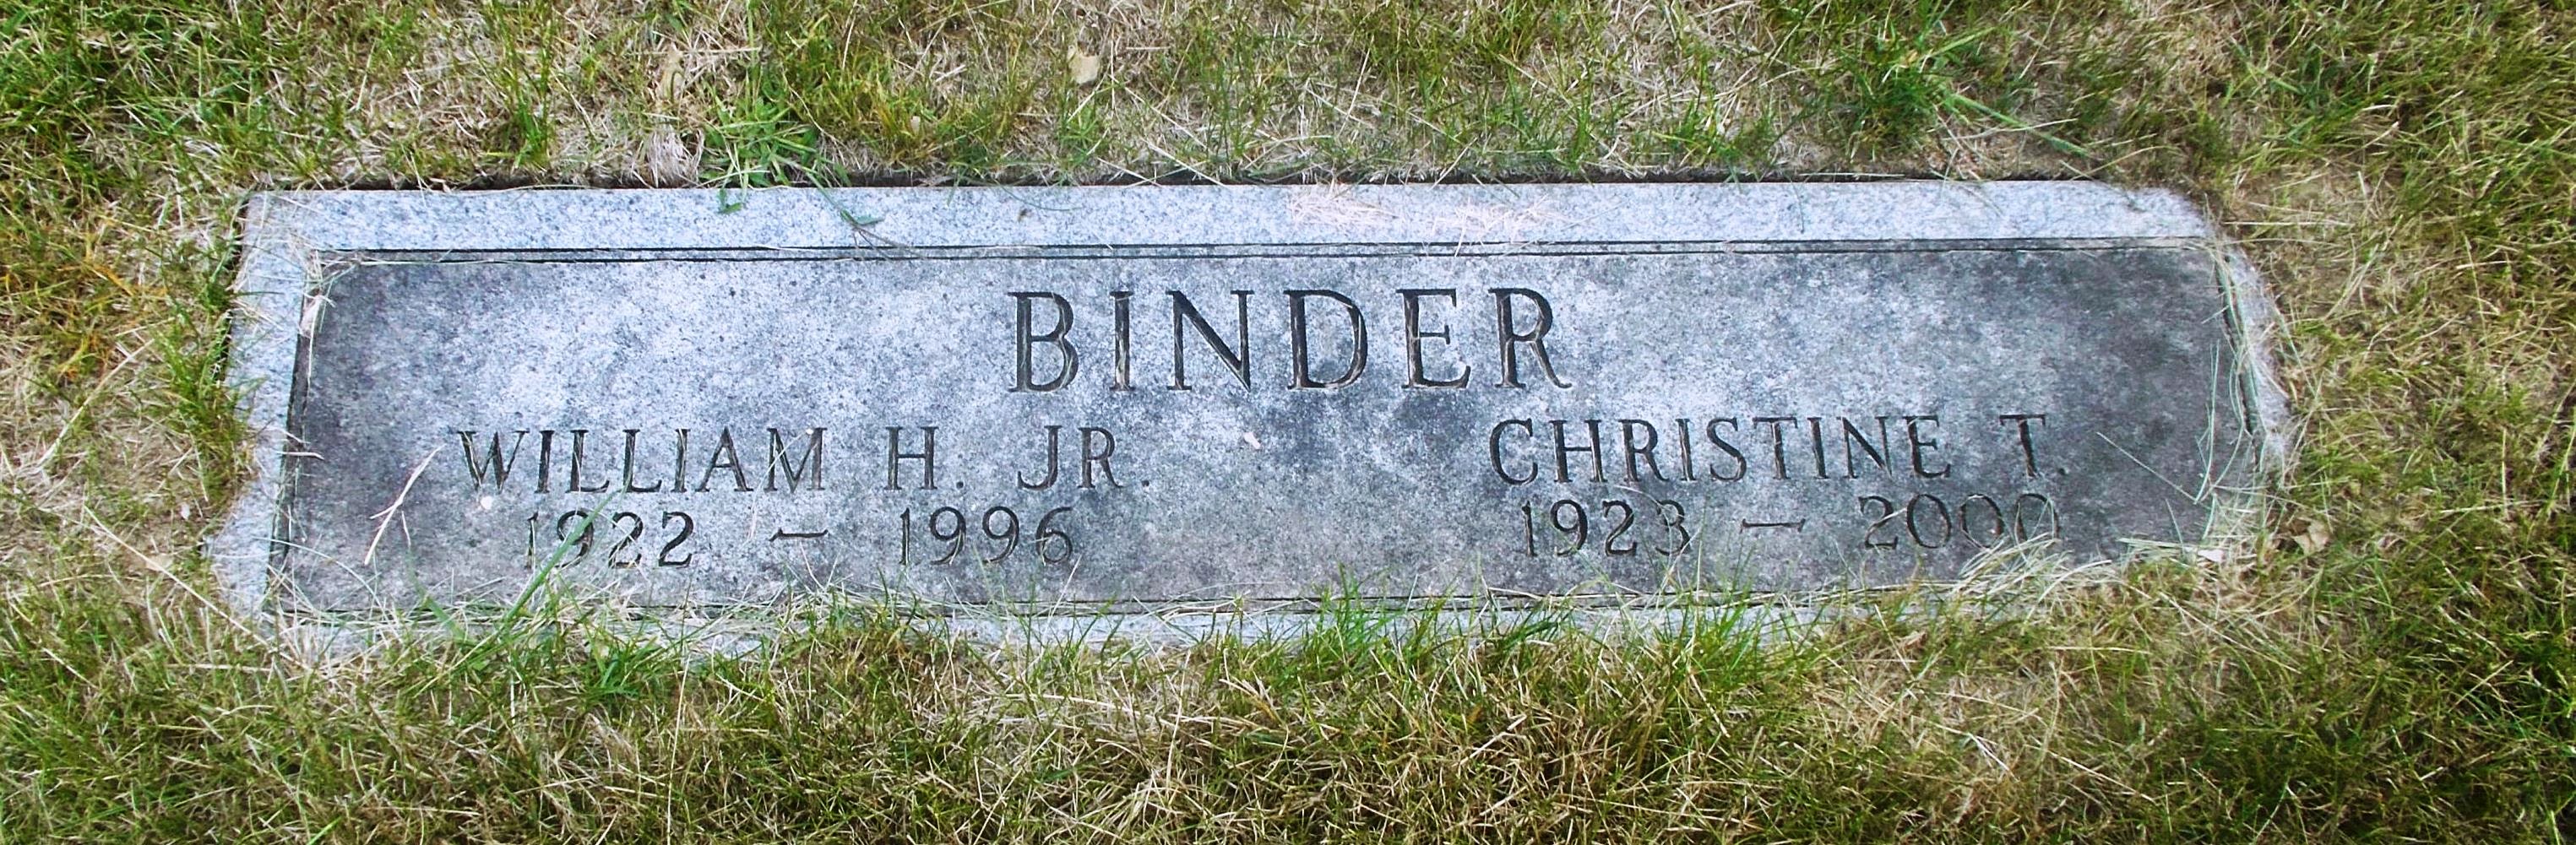 Christine T Binder